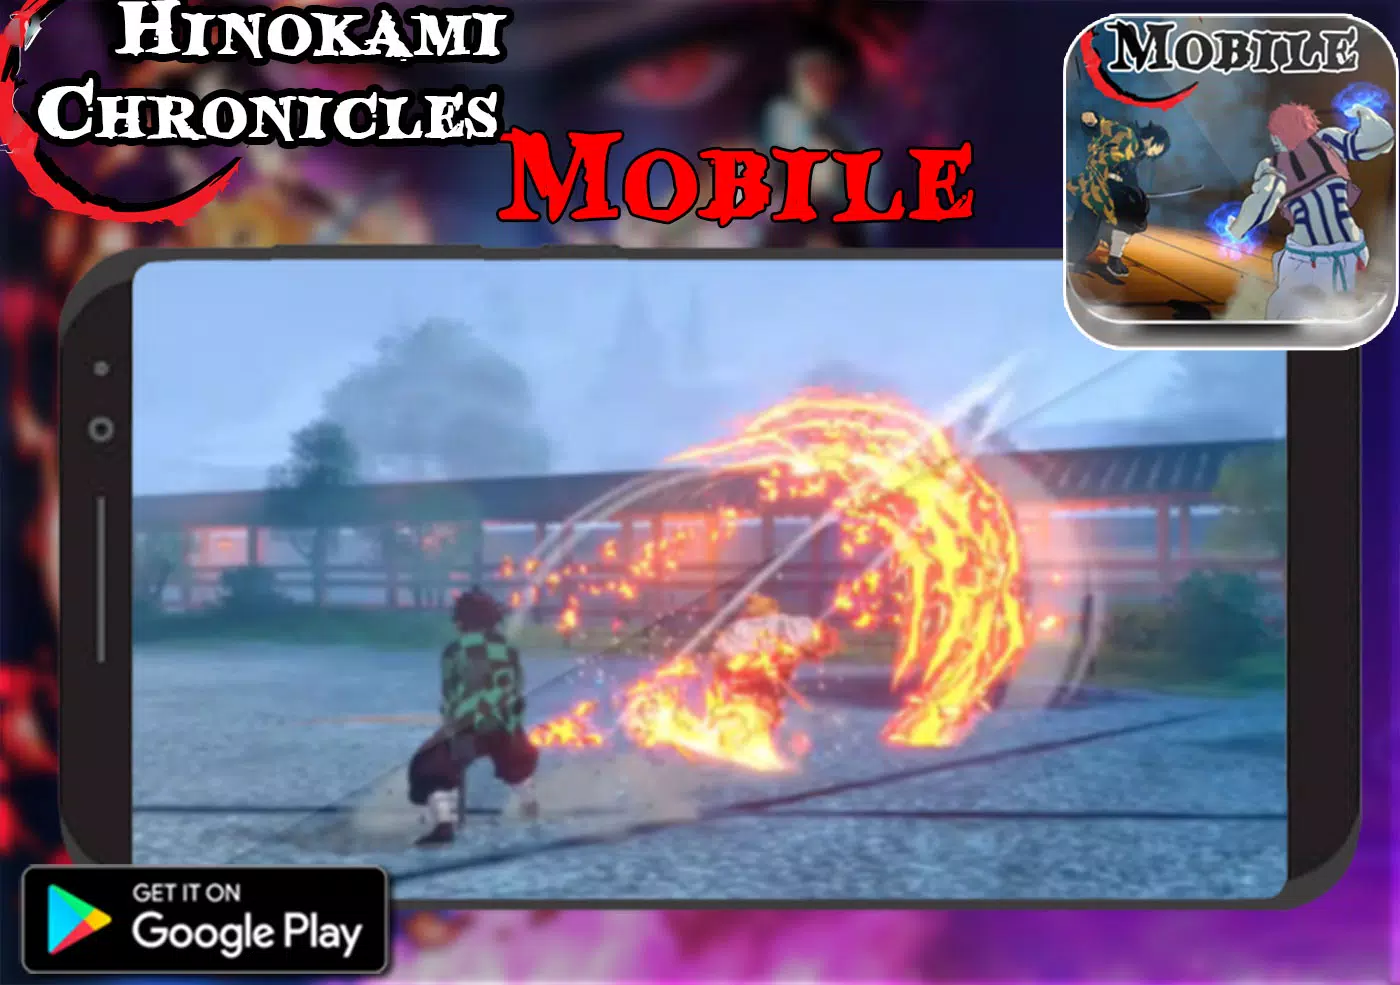 Hinokami Mobile Slayer Clue - Download APK